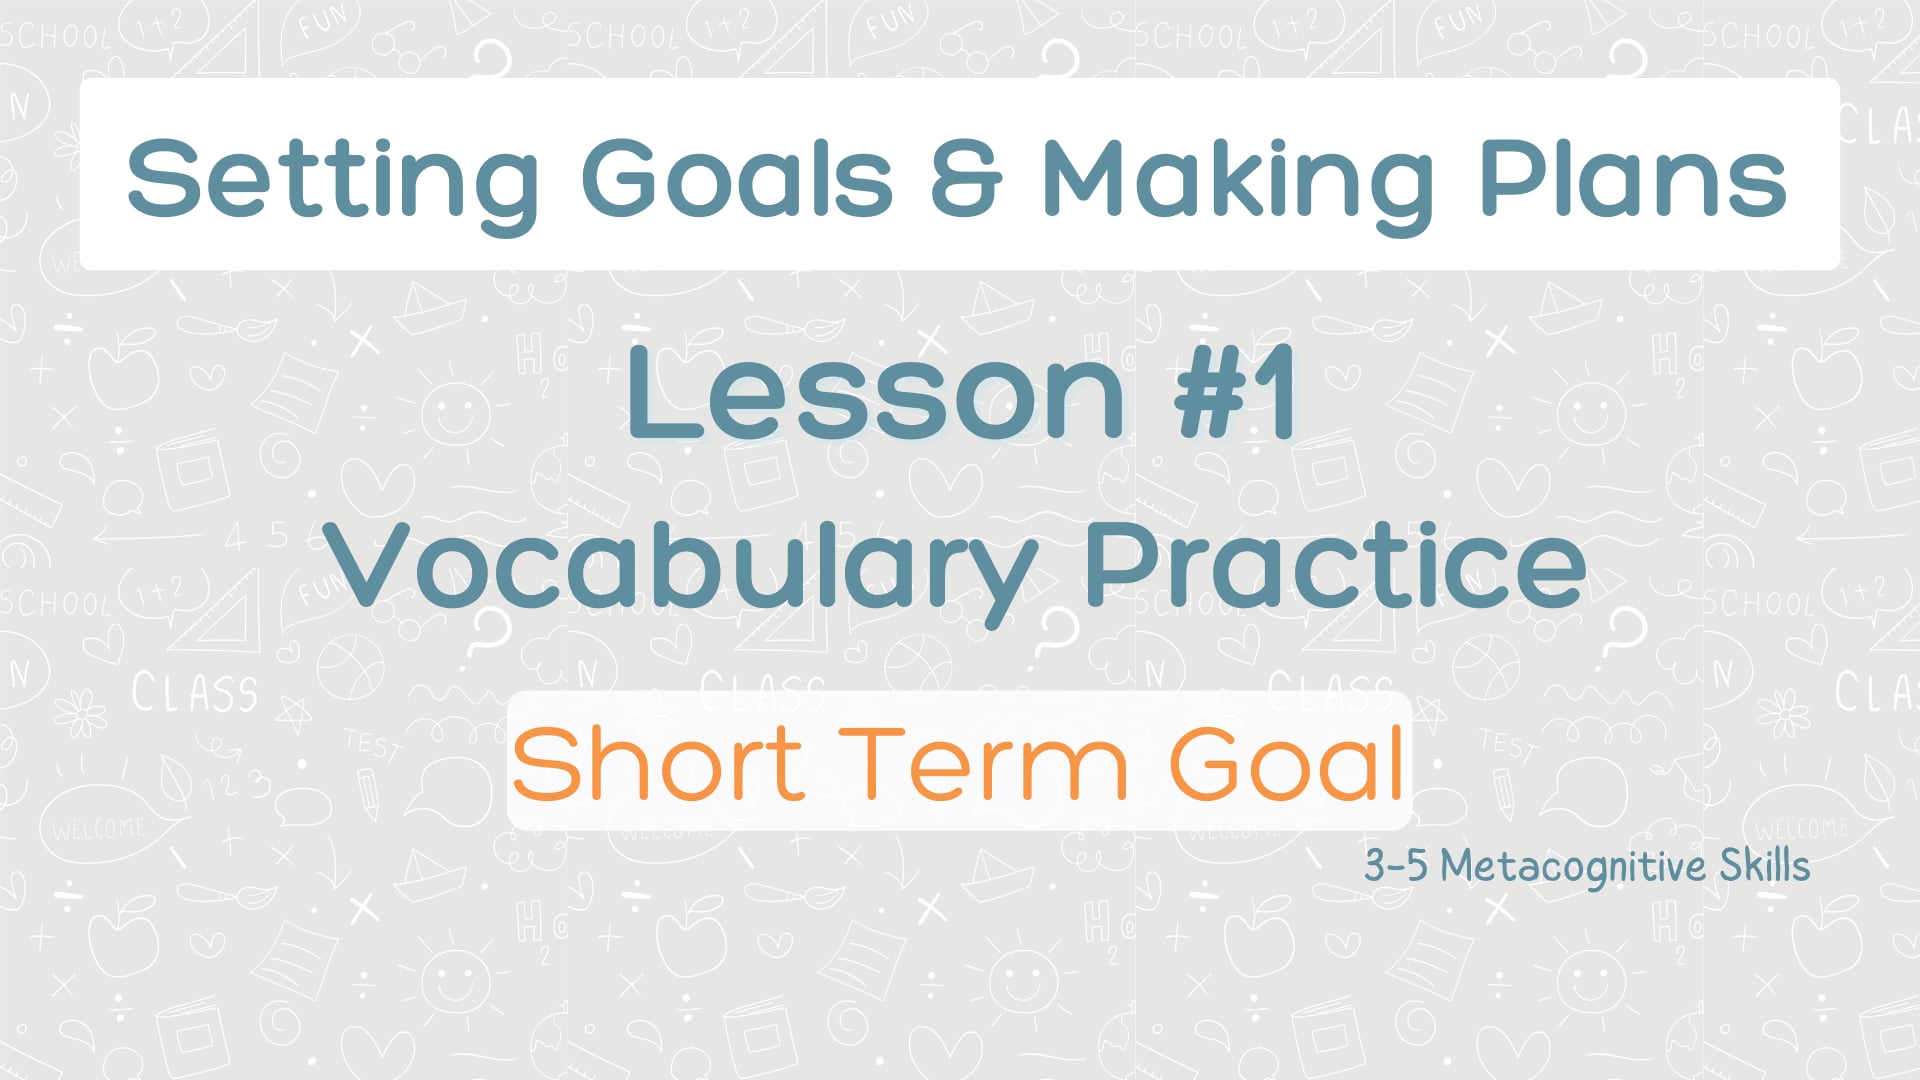 Lesson #1 Vocabulary Practice: Short Term Goal video thumbnail